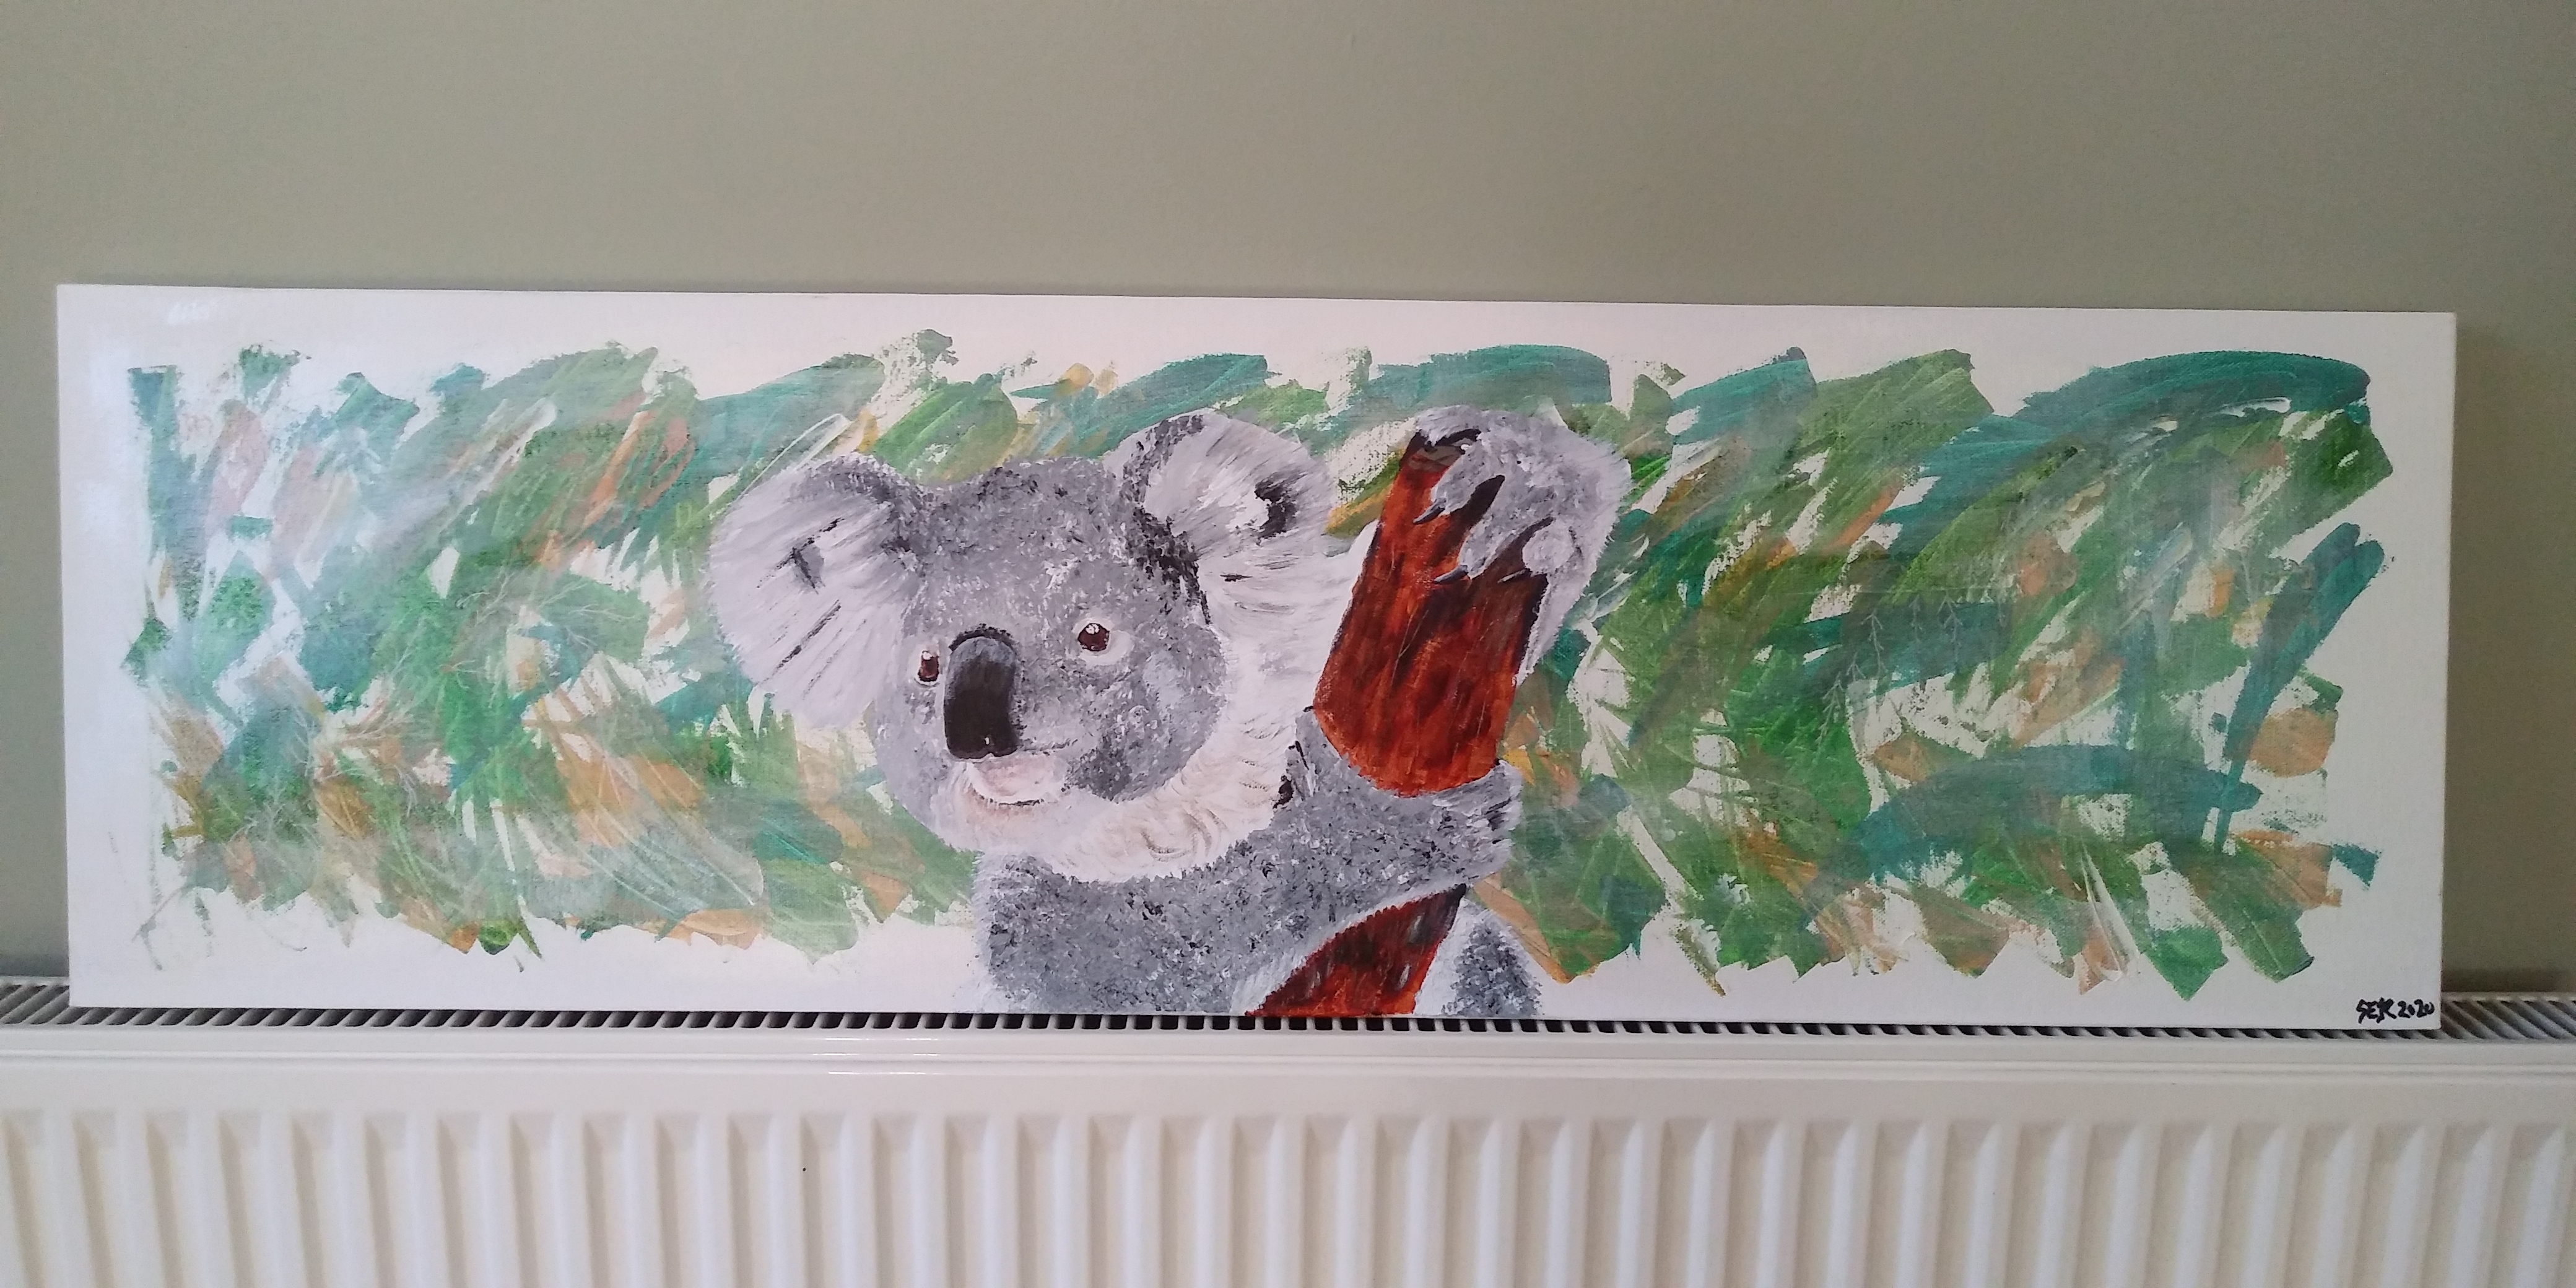 Sharon Raymond, "Koala Love", acrylic on canvas, 30 x 100cm, c. 2020. I used acrylics and pens for